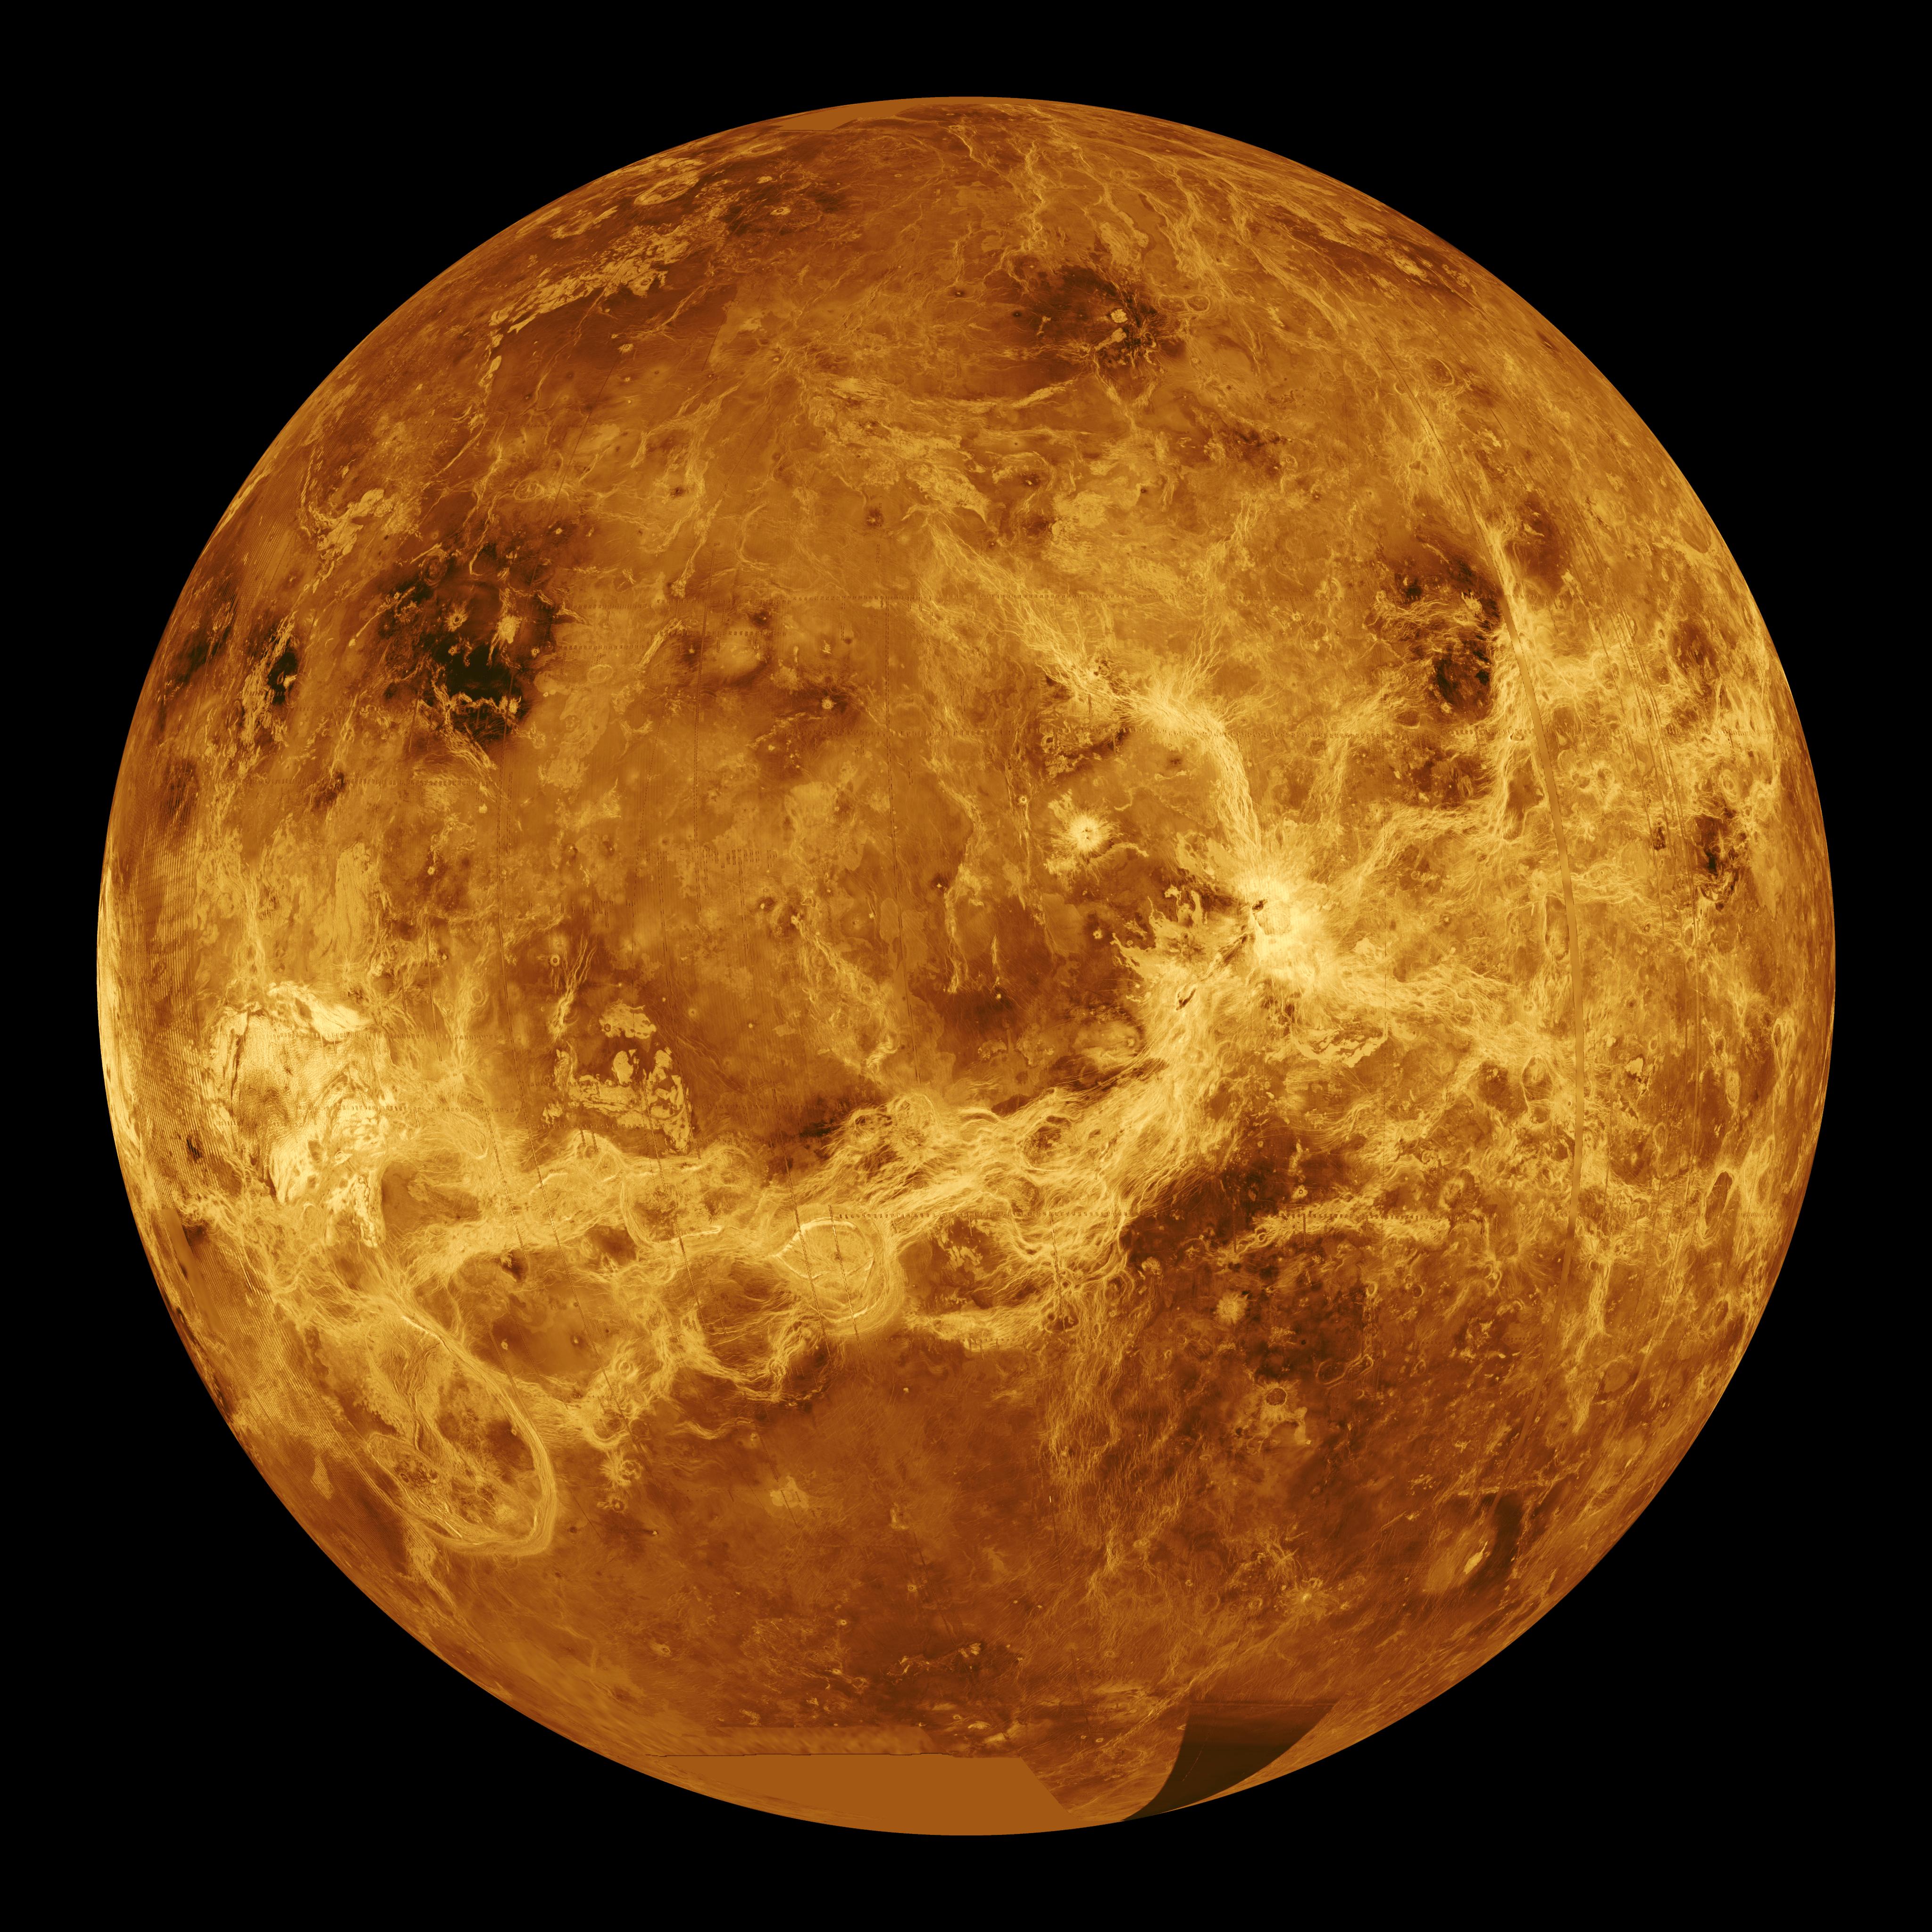 Radar image reveals Venus surface.